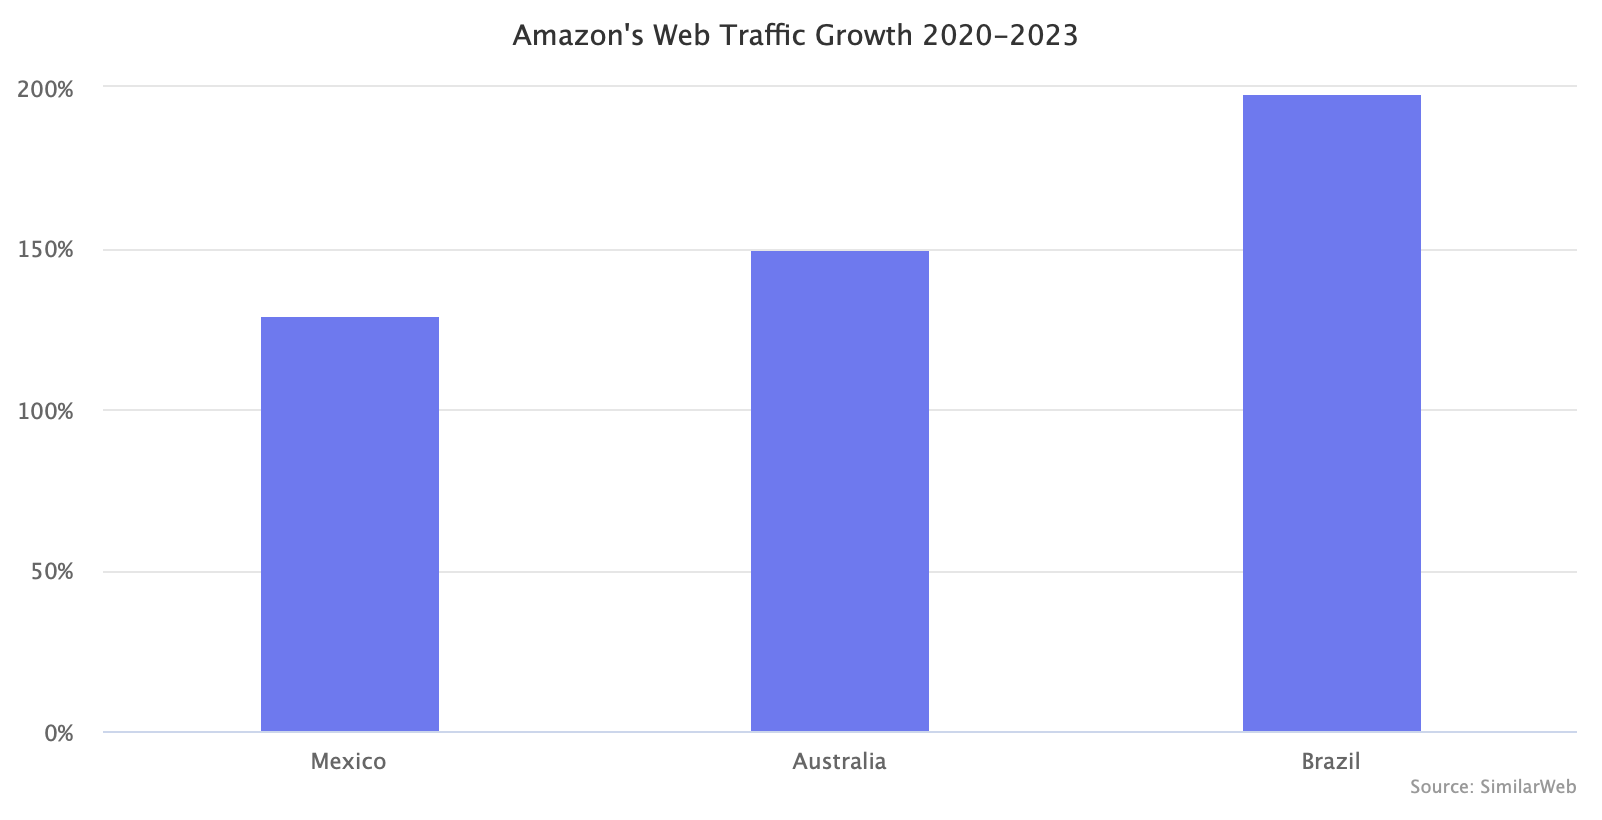 Amazon's Web Traffic Growth 2020-2023